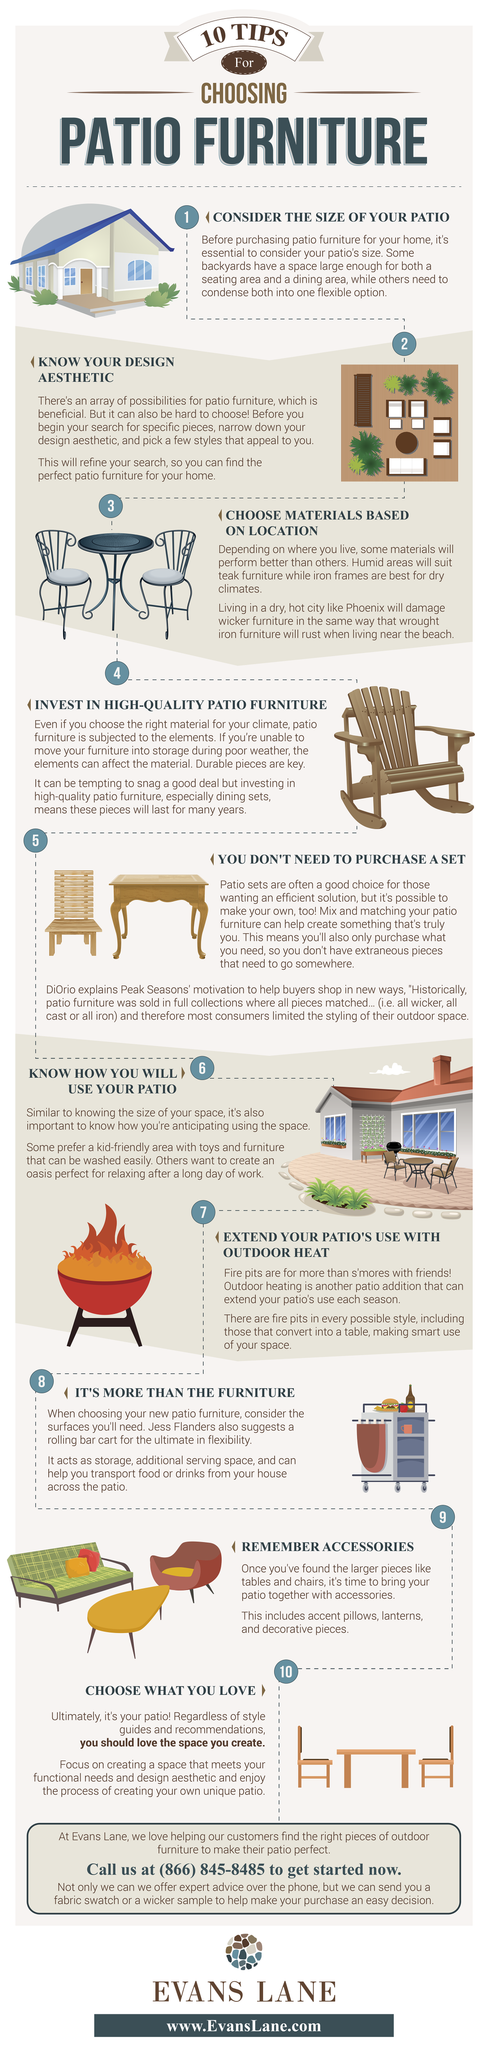 10 Tips For Choosing Patio Furniture Evans Lane